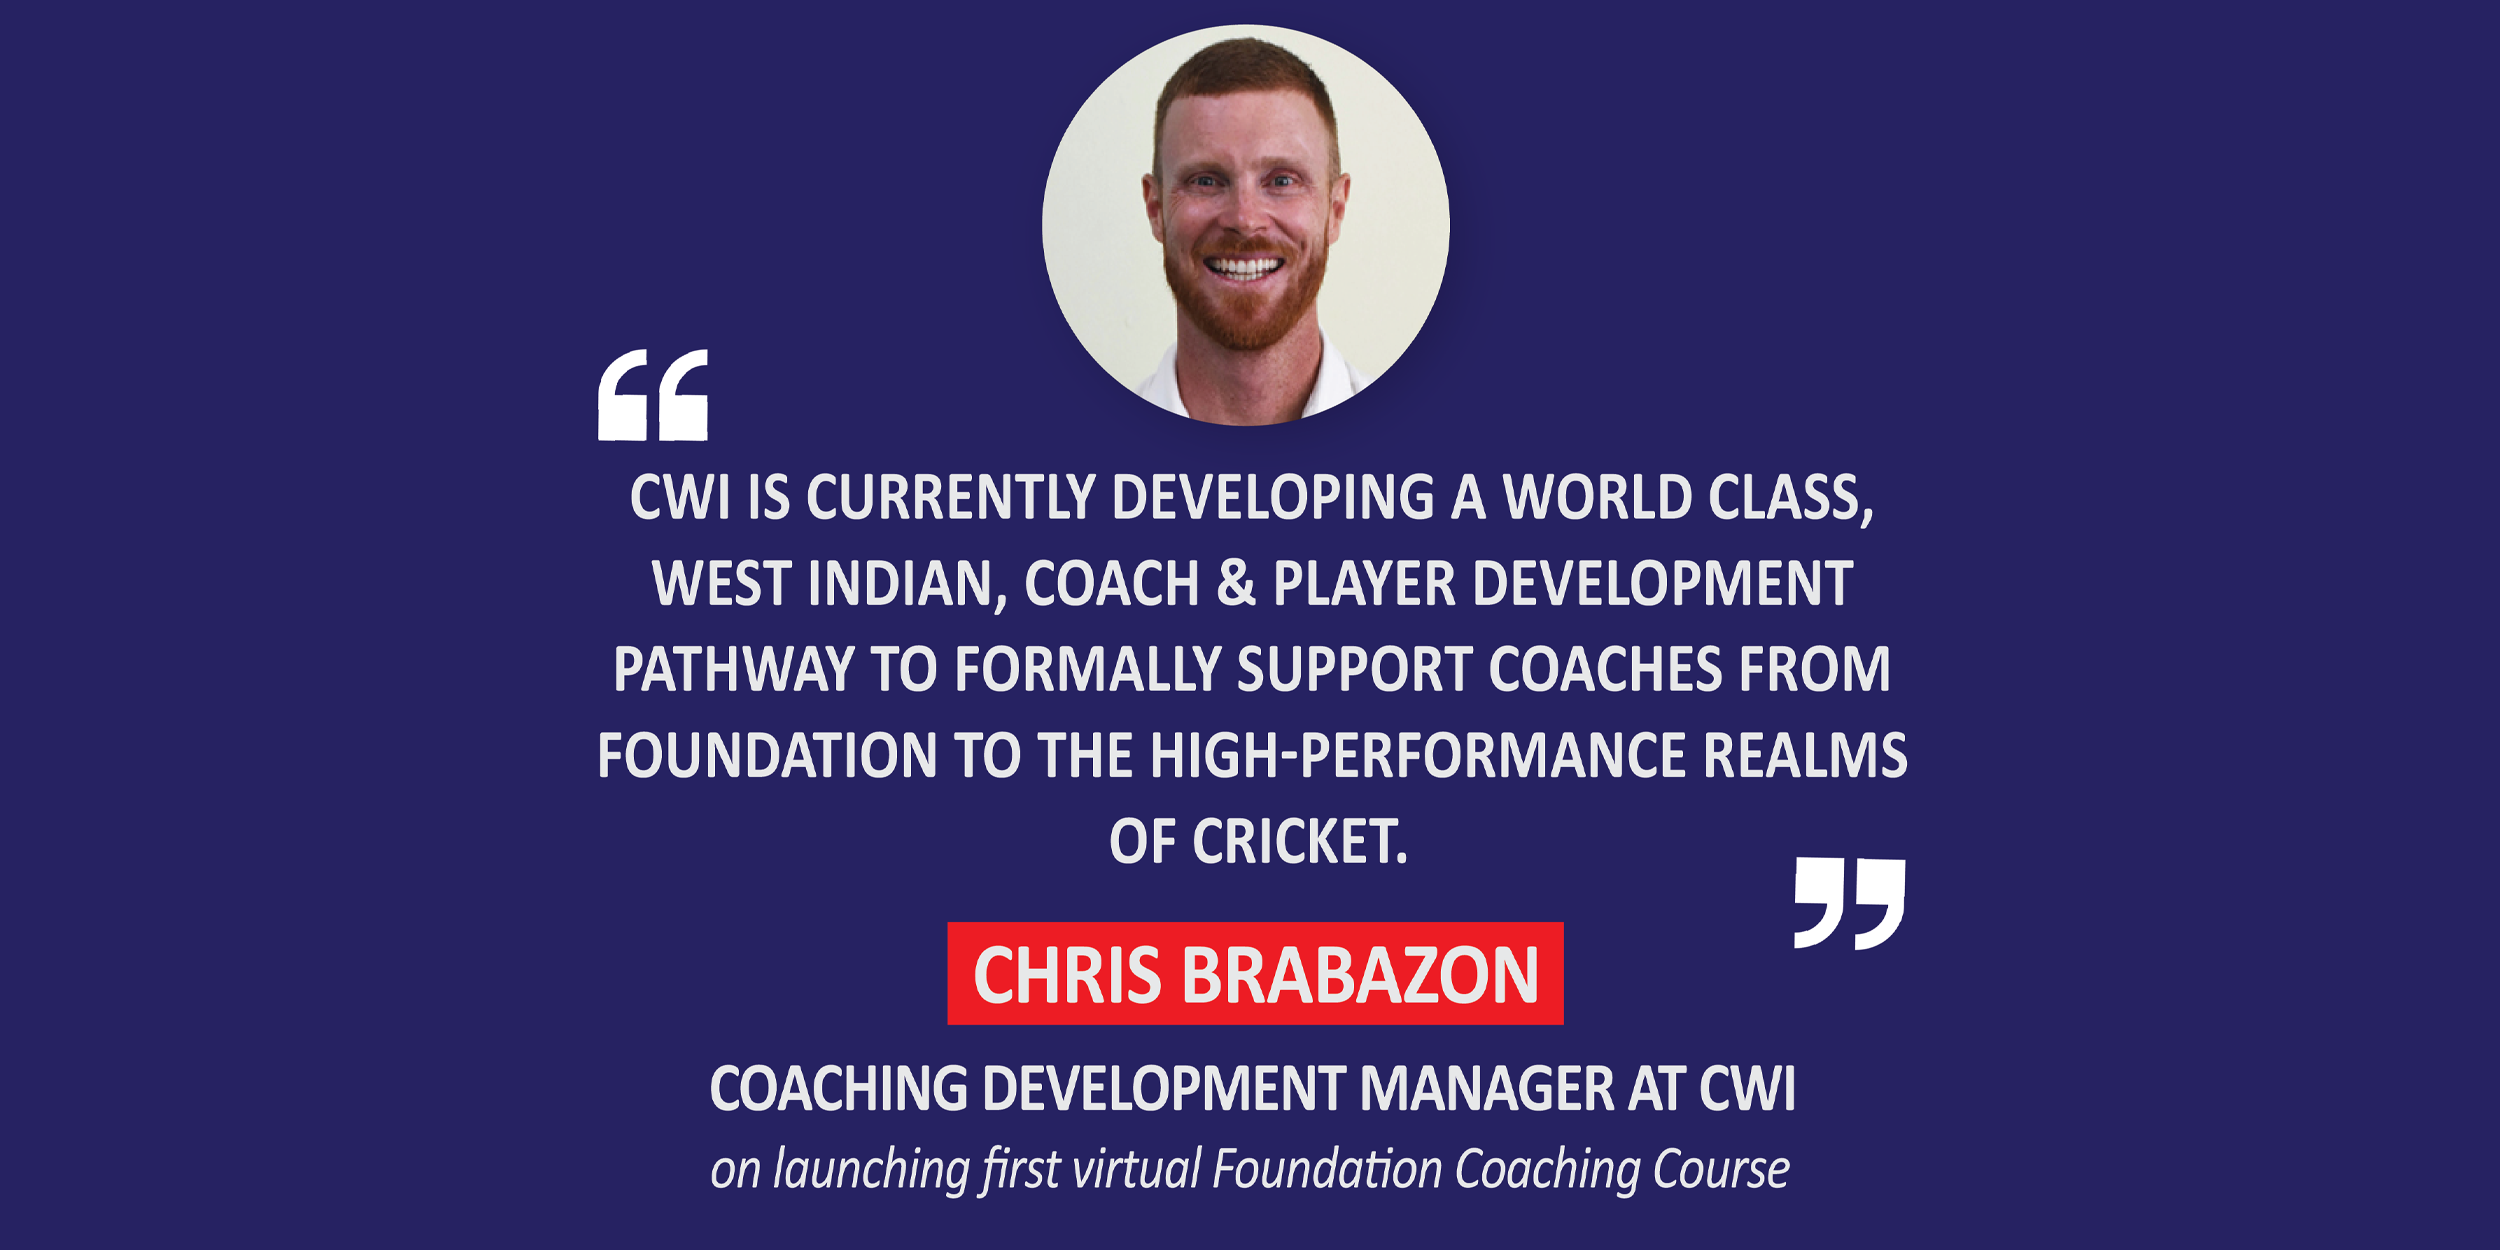 Chris Brabazon, Coaching Development Manager, CWI on launching first virtual Foundation Coaching Course